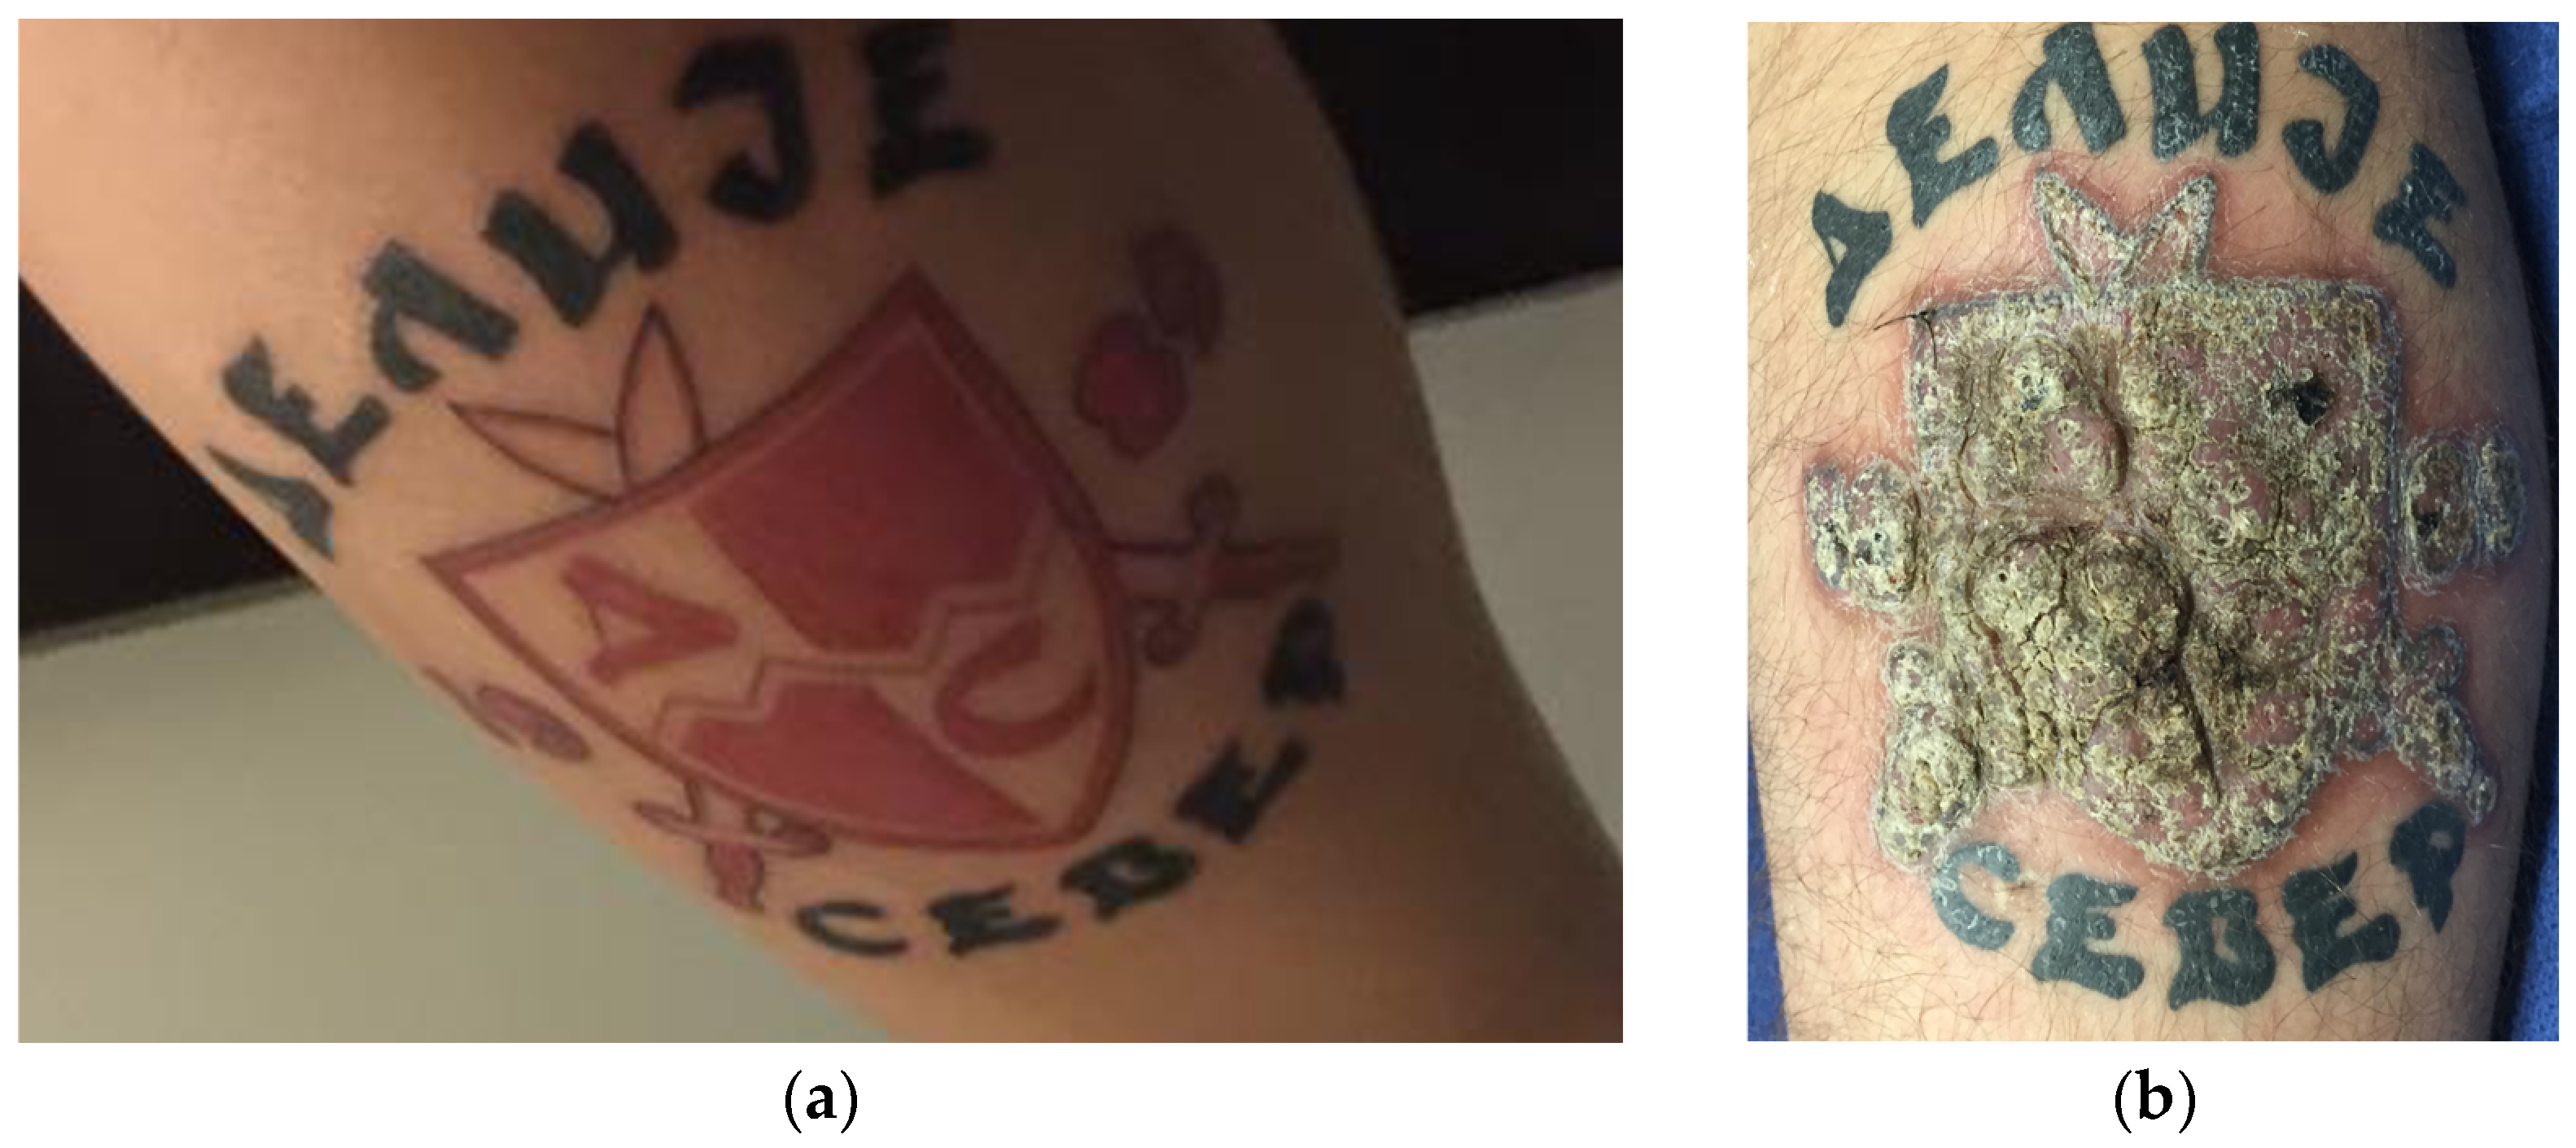 Type 1 Diabetic Warrior Temporary Tattoo – Temporary Tattoos